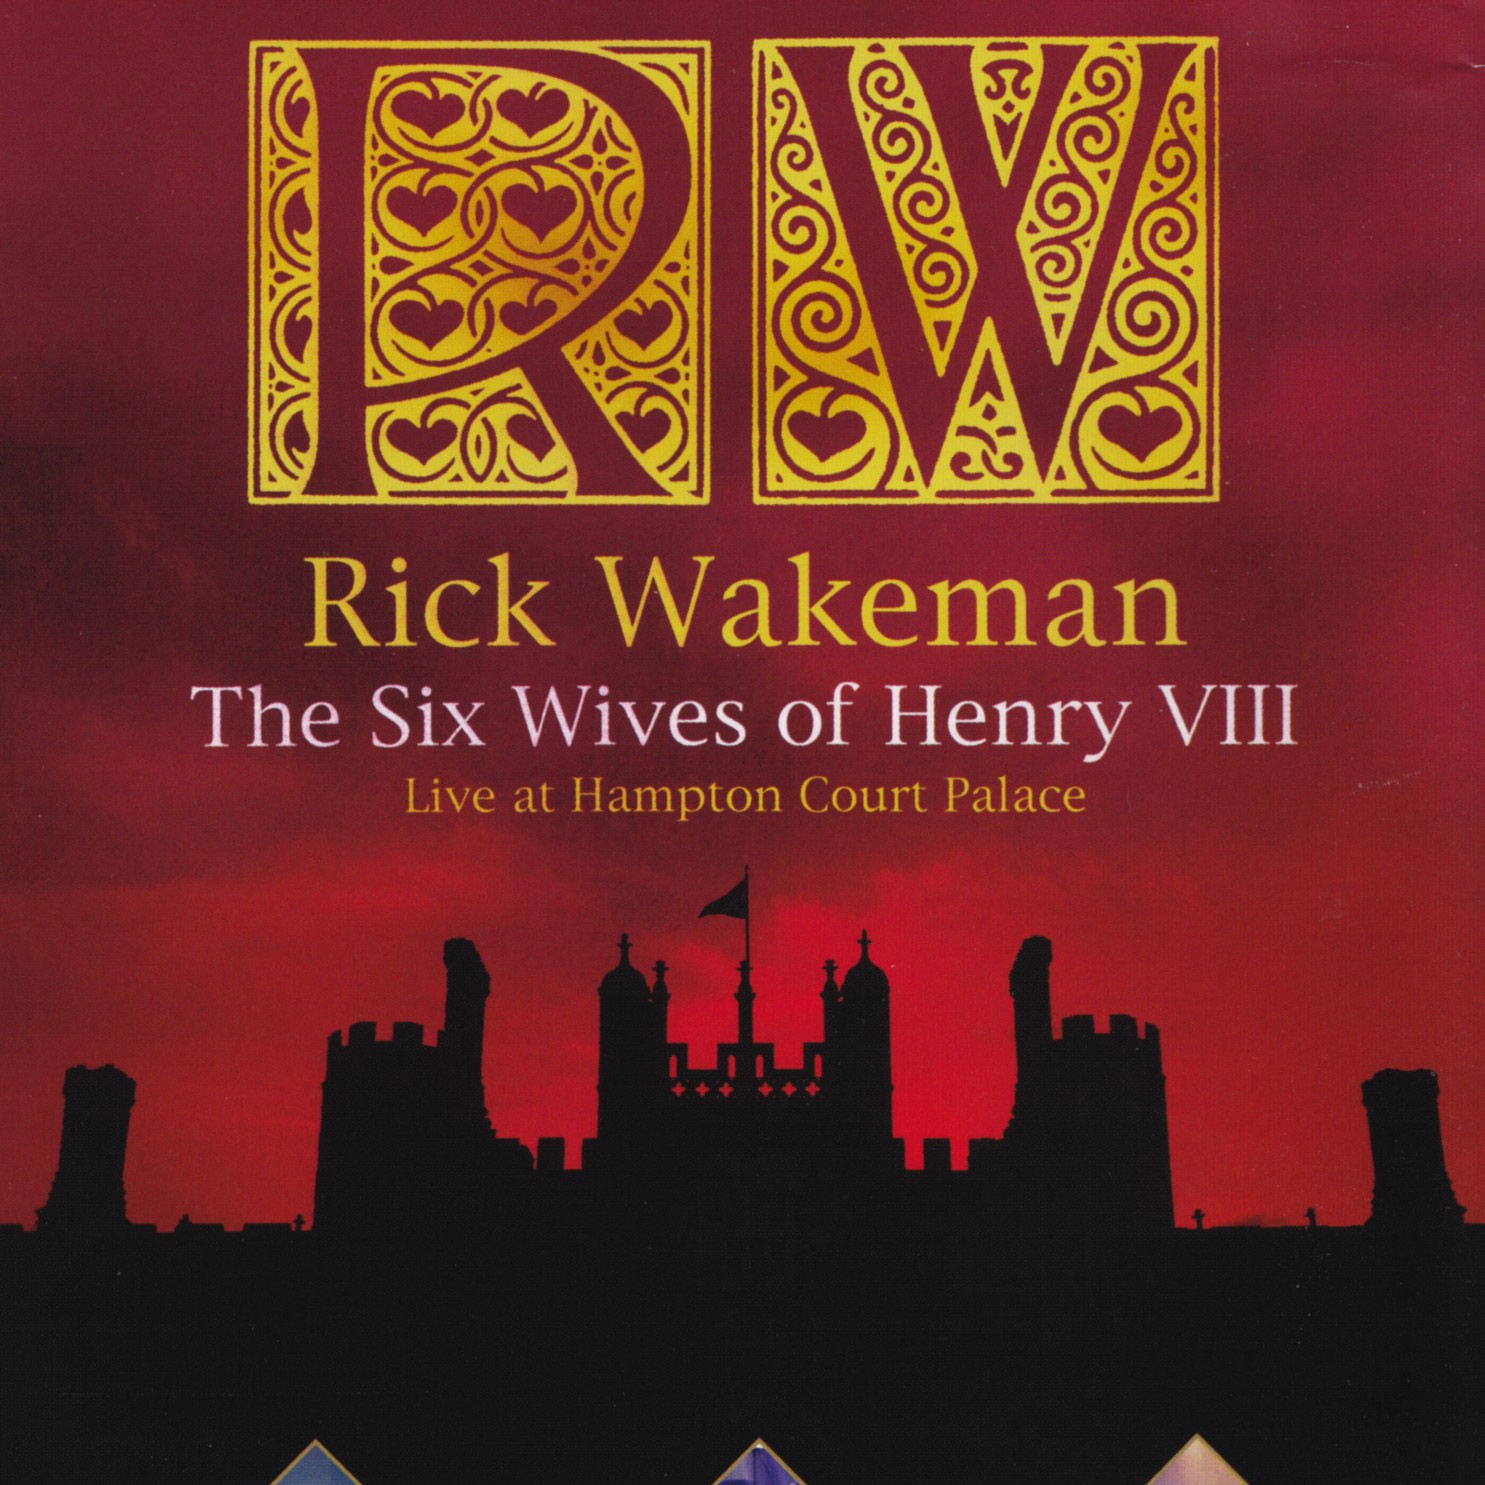 Rick Wakeman: The Six Wives of Henry VIII – Live at Hampton Court Palace